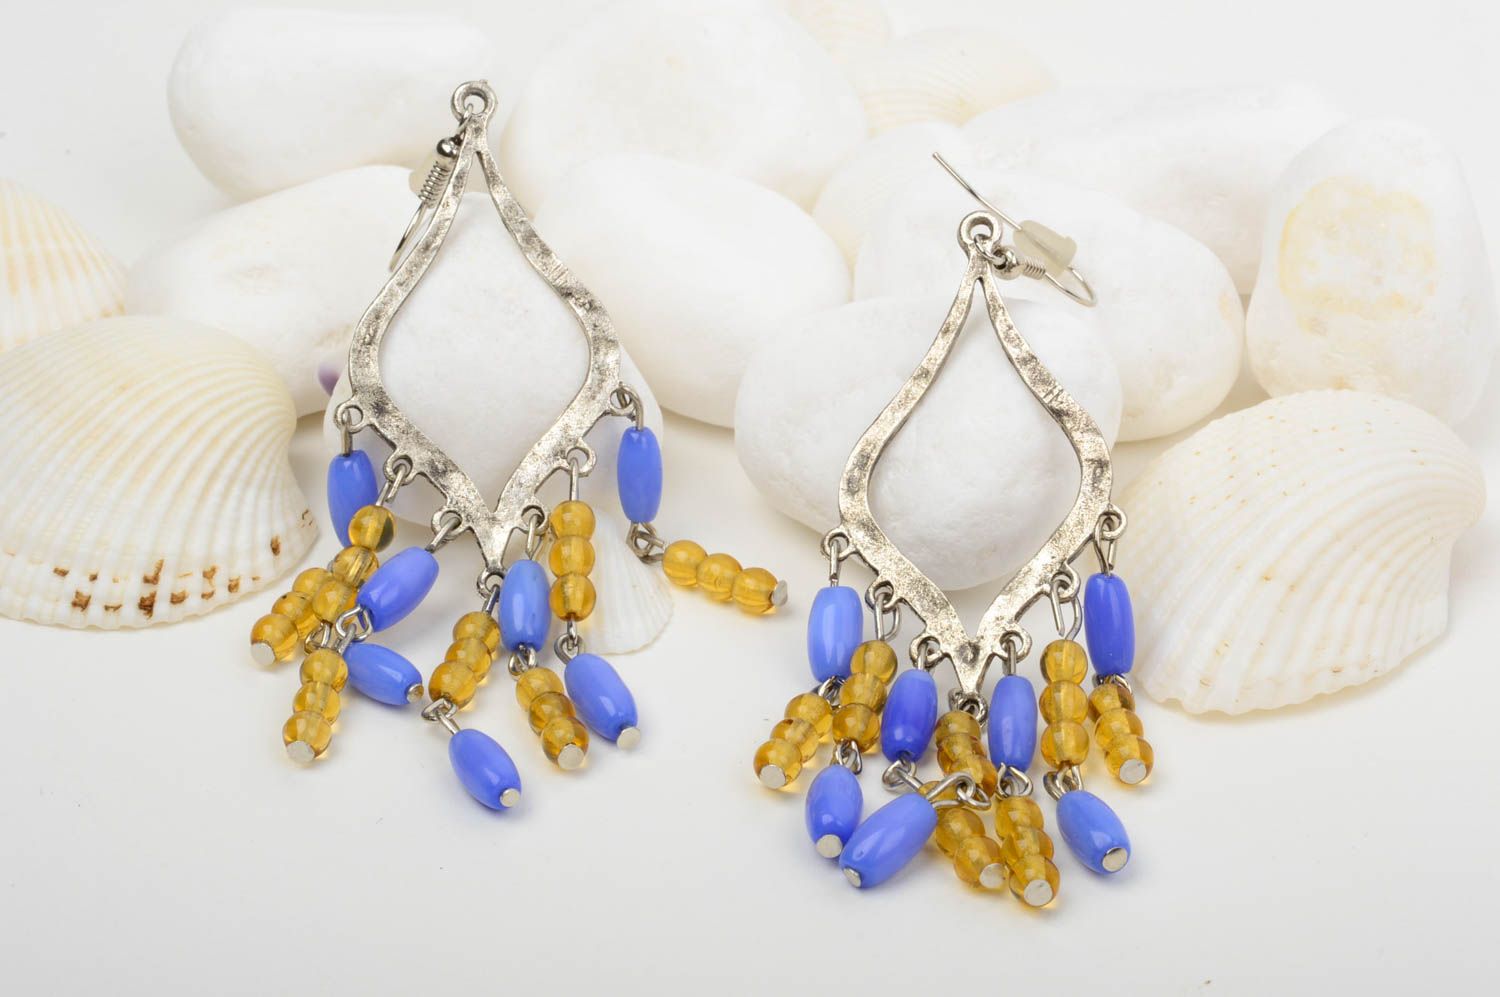 Handmade earrings designer jewelry unusual accessory gift ideas beads earrings photo 1